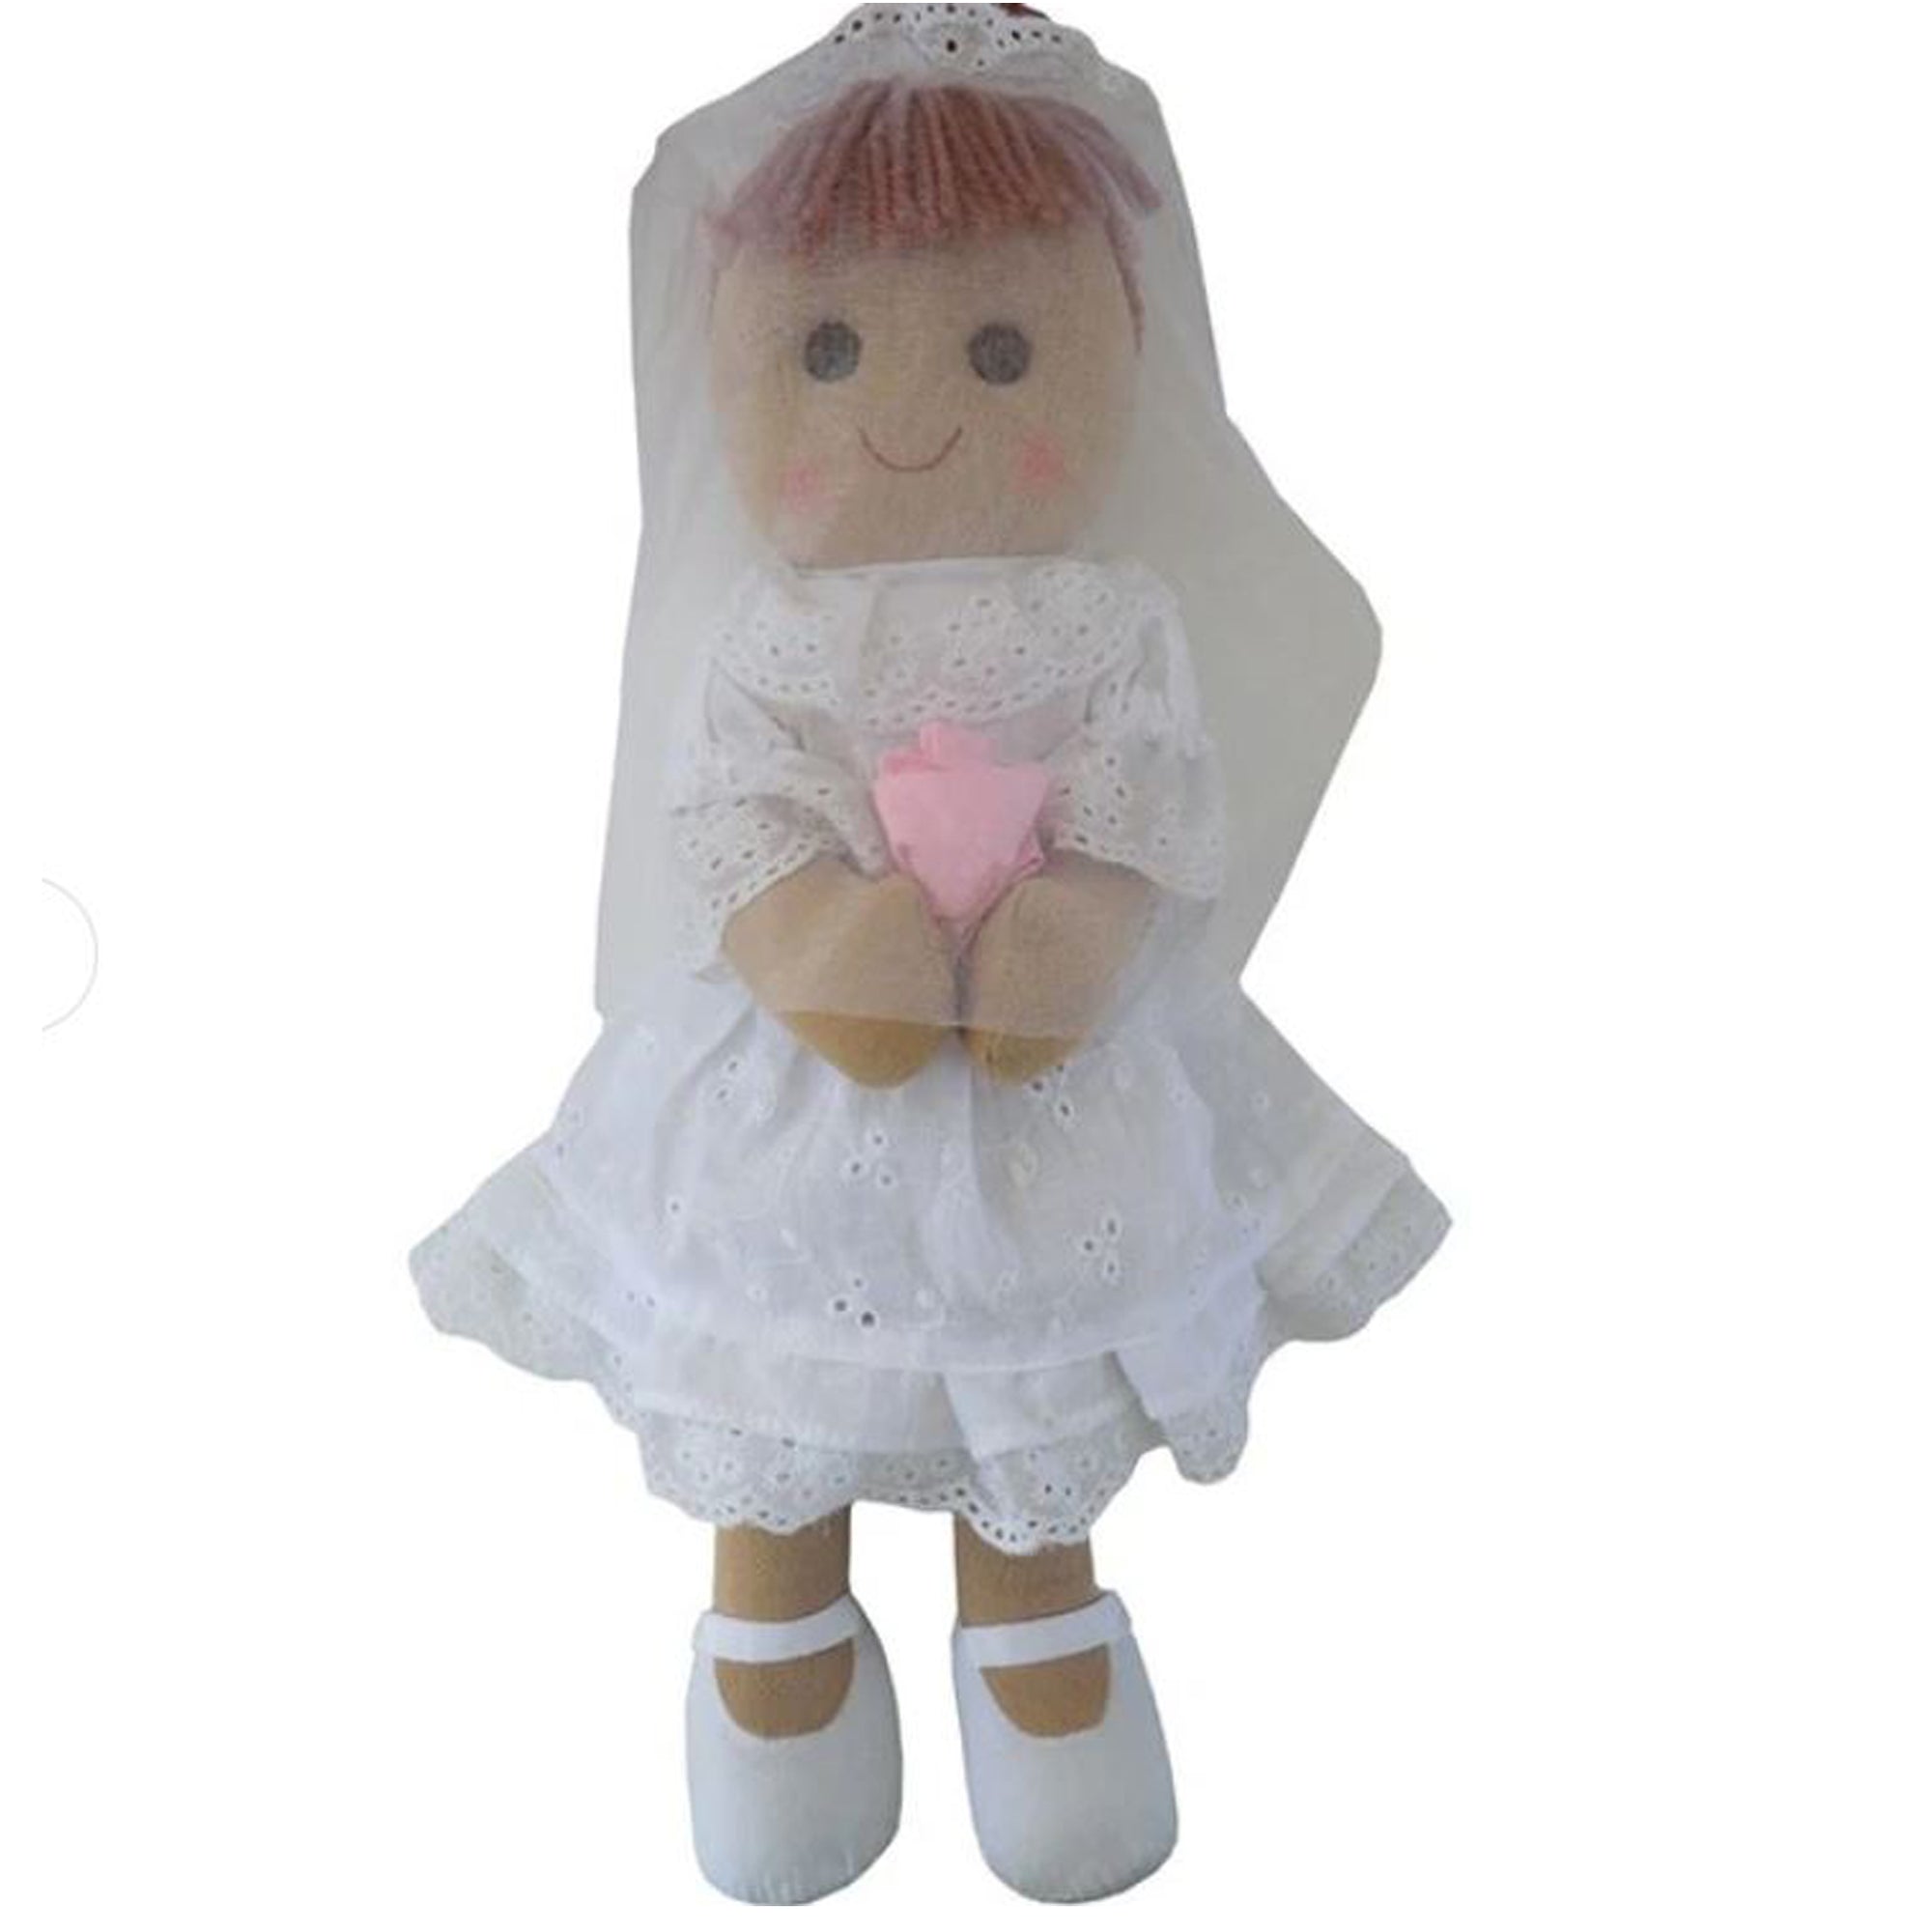 Communion Rag Doll - Personalise It